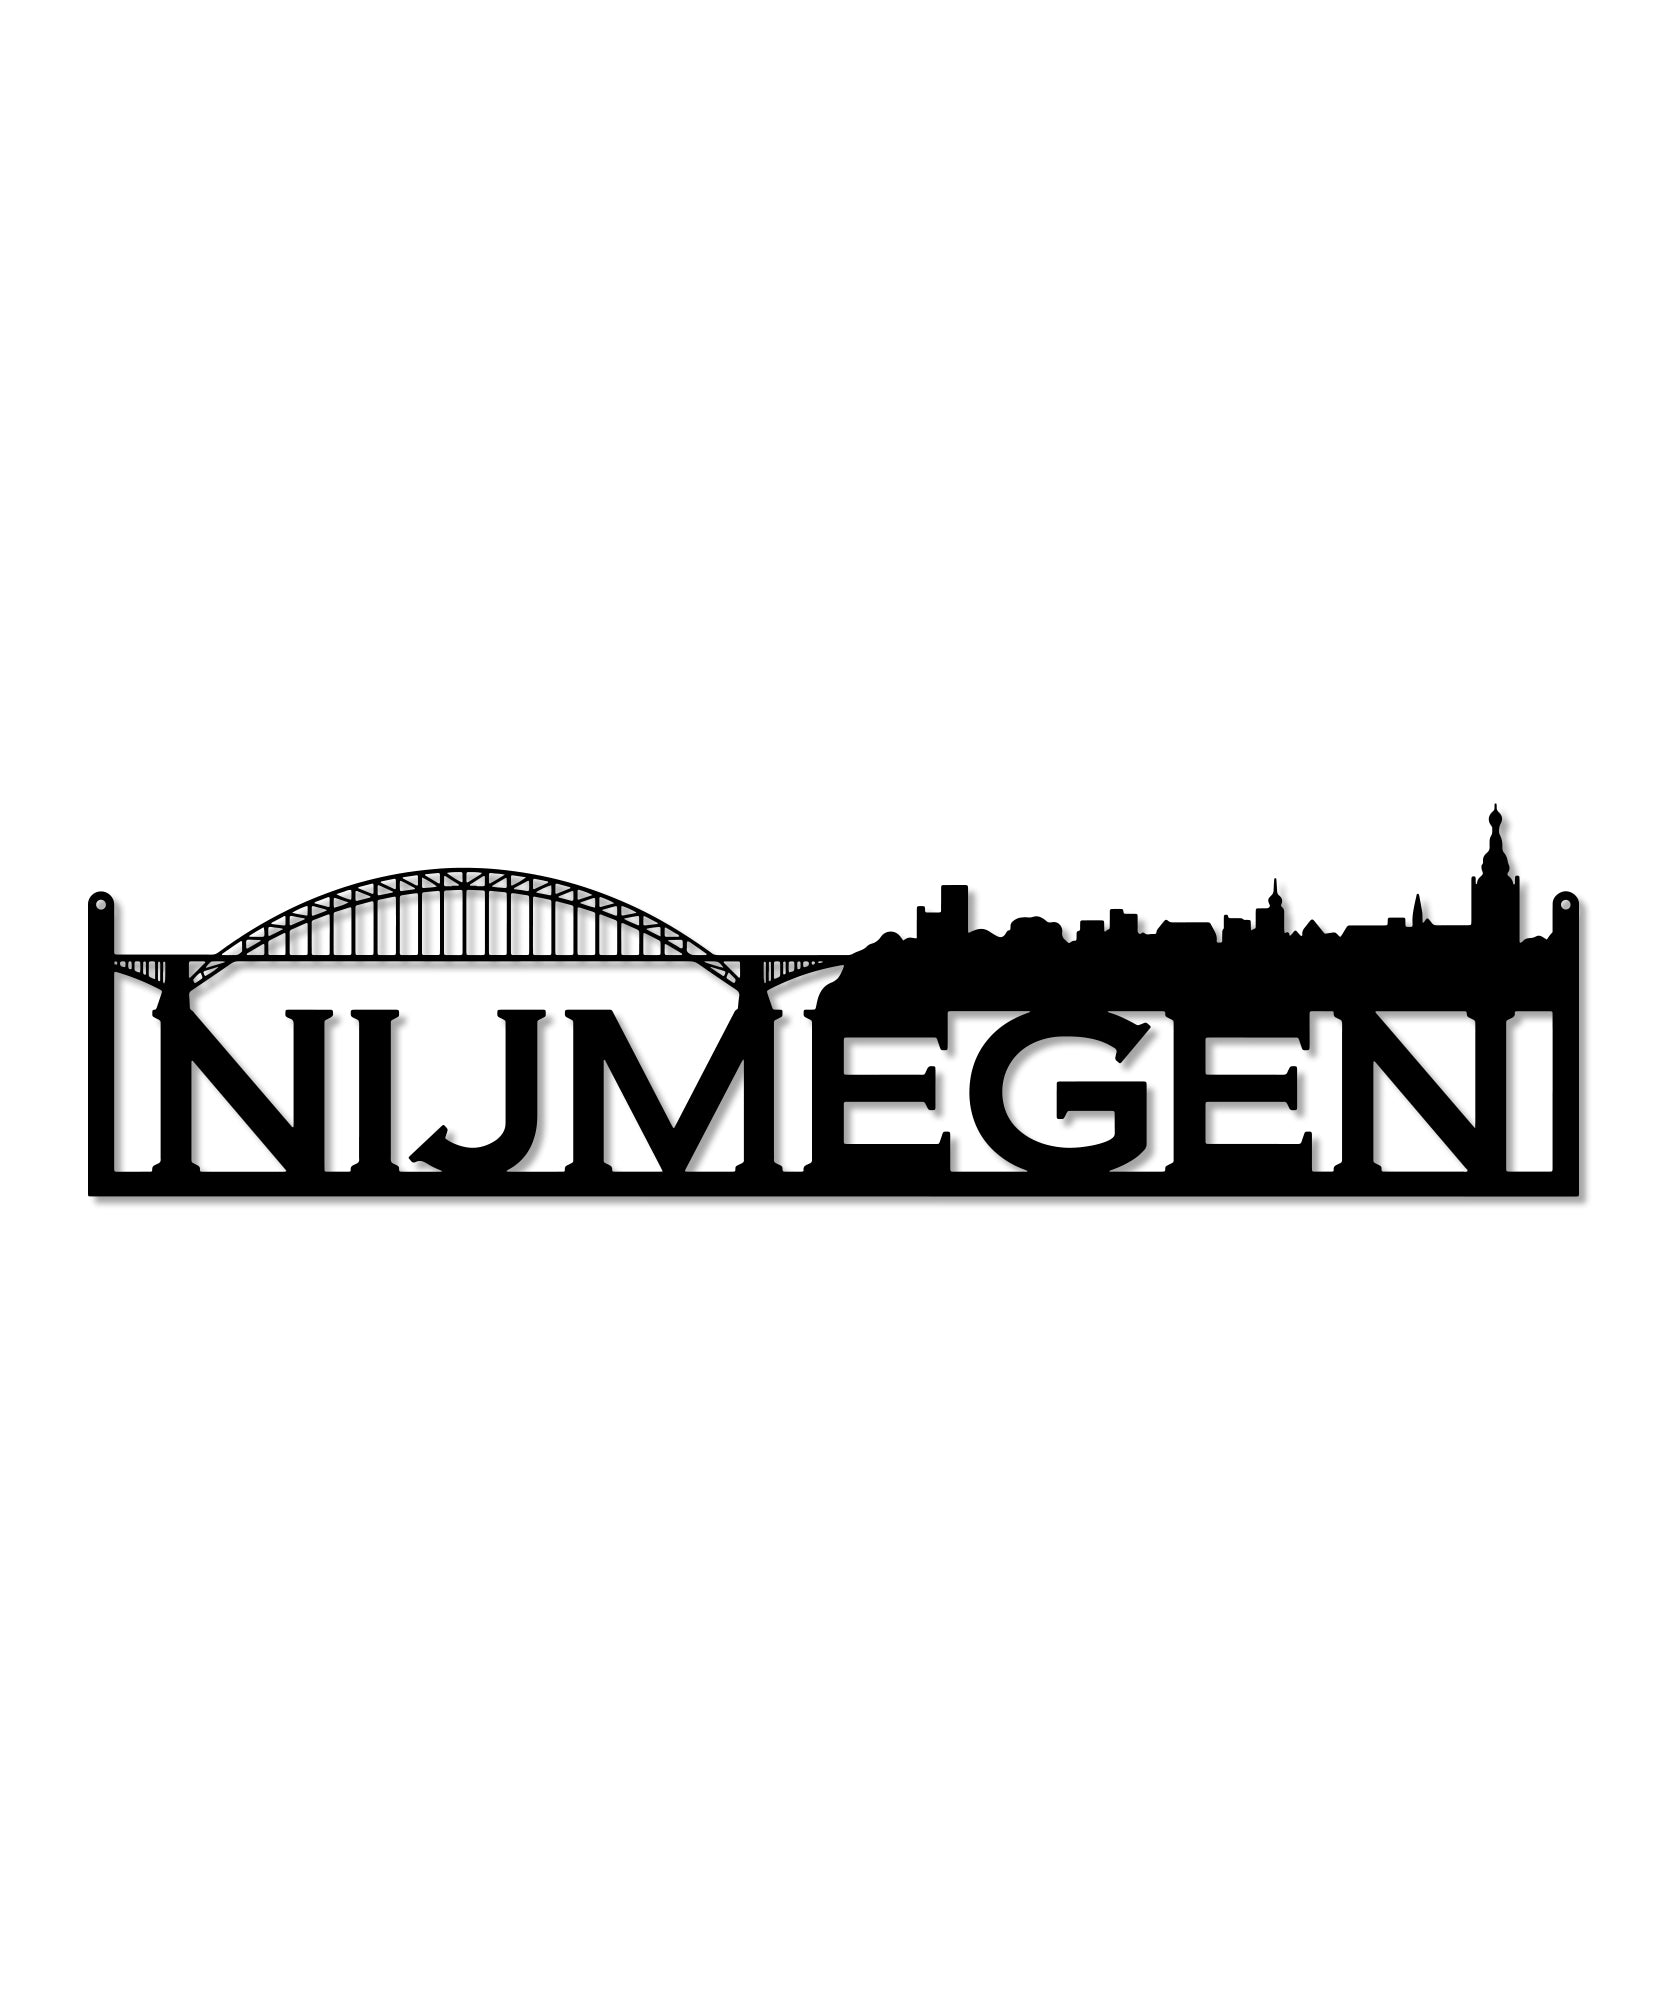 Nijmegen skyline klein nineteen design ilovenijmegen.nl